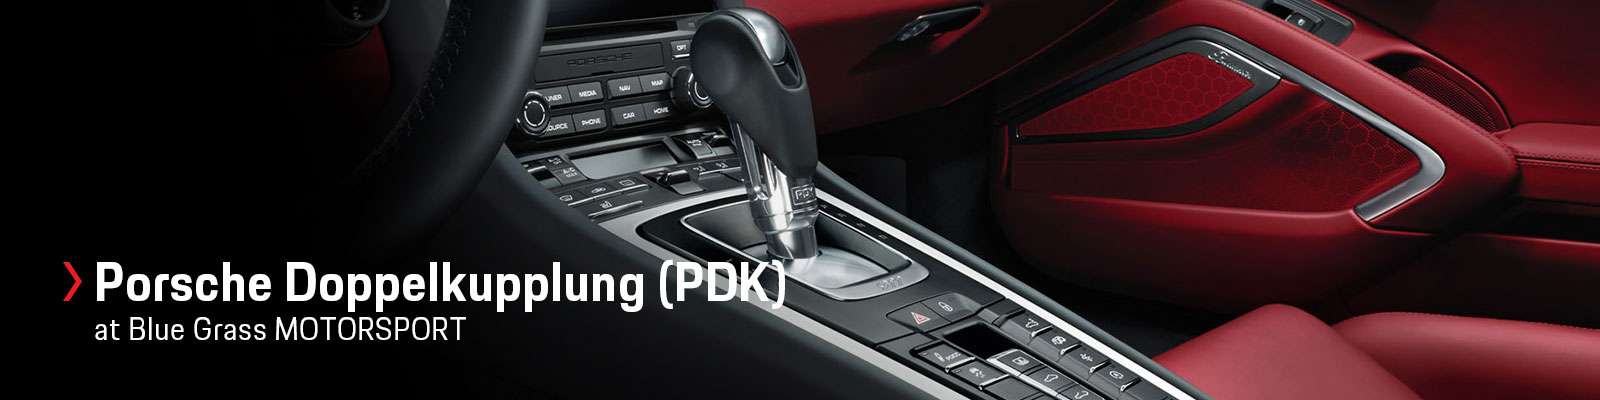 Porsche Doppelkupplung (PDK) Transmission